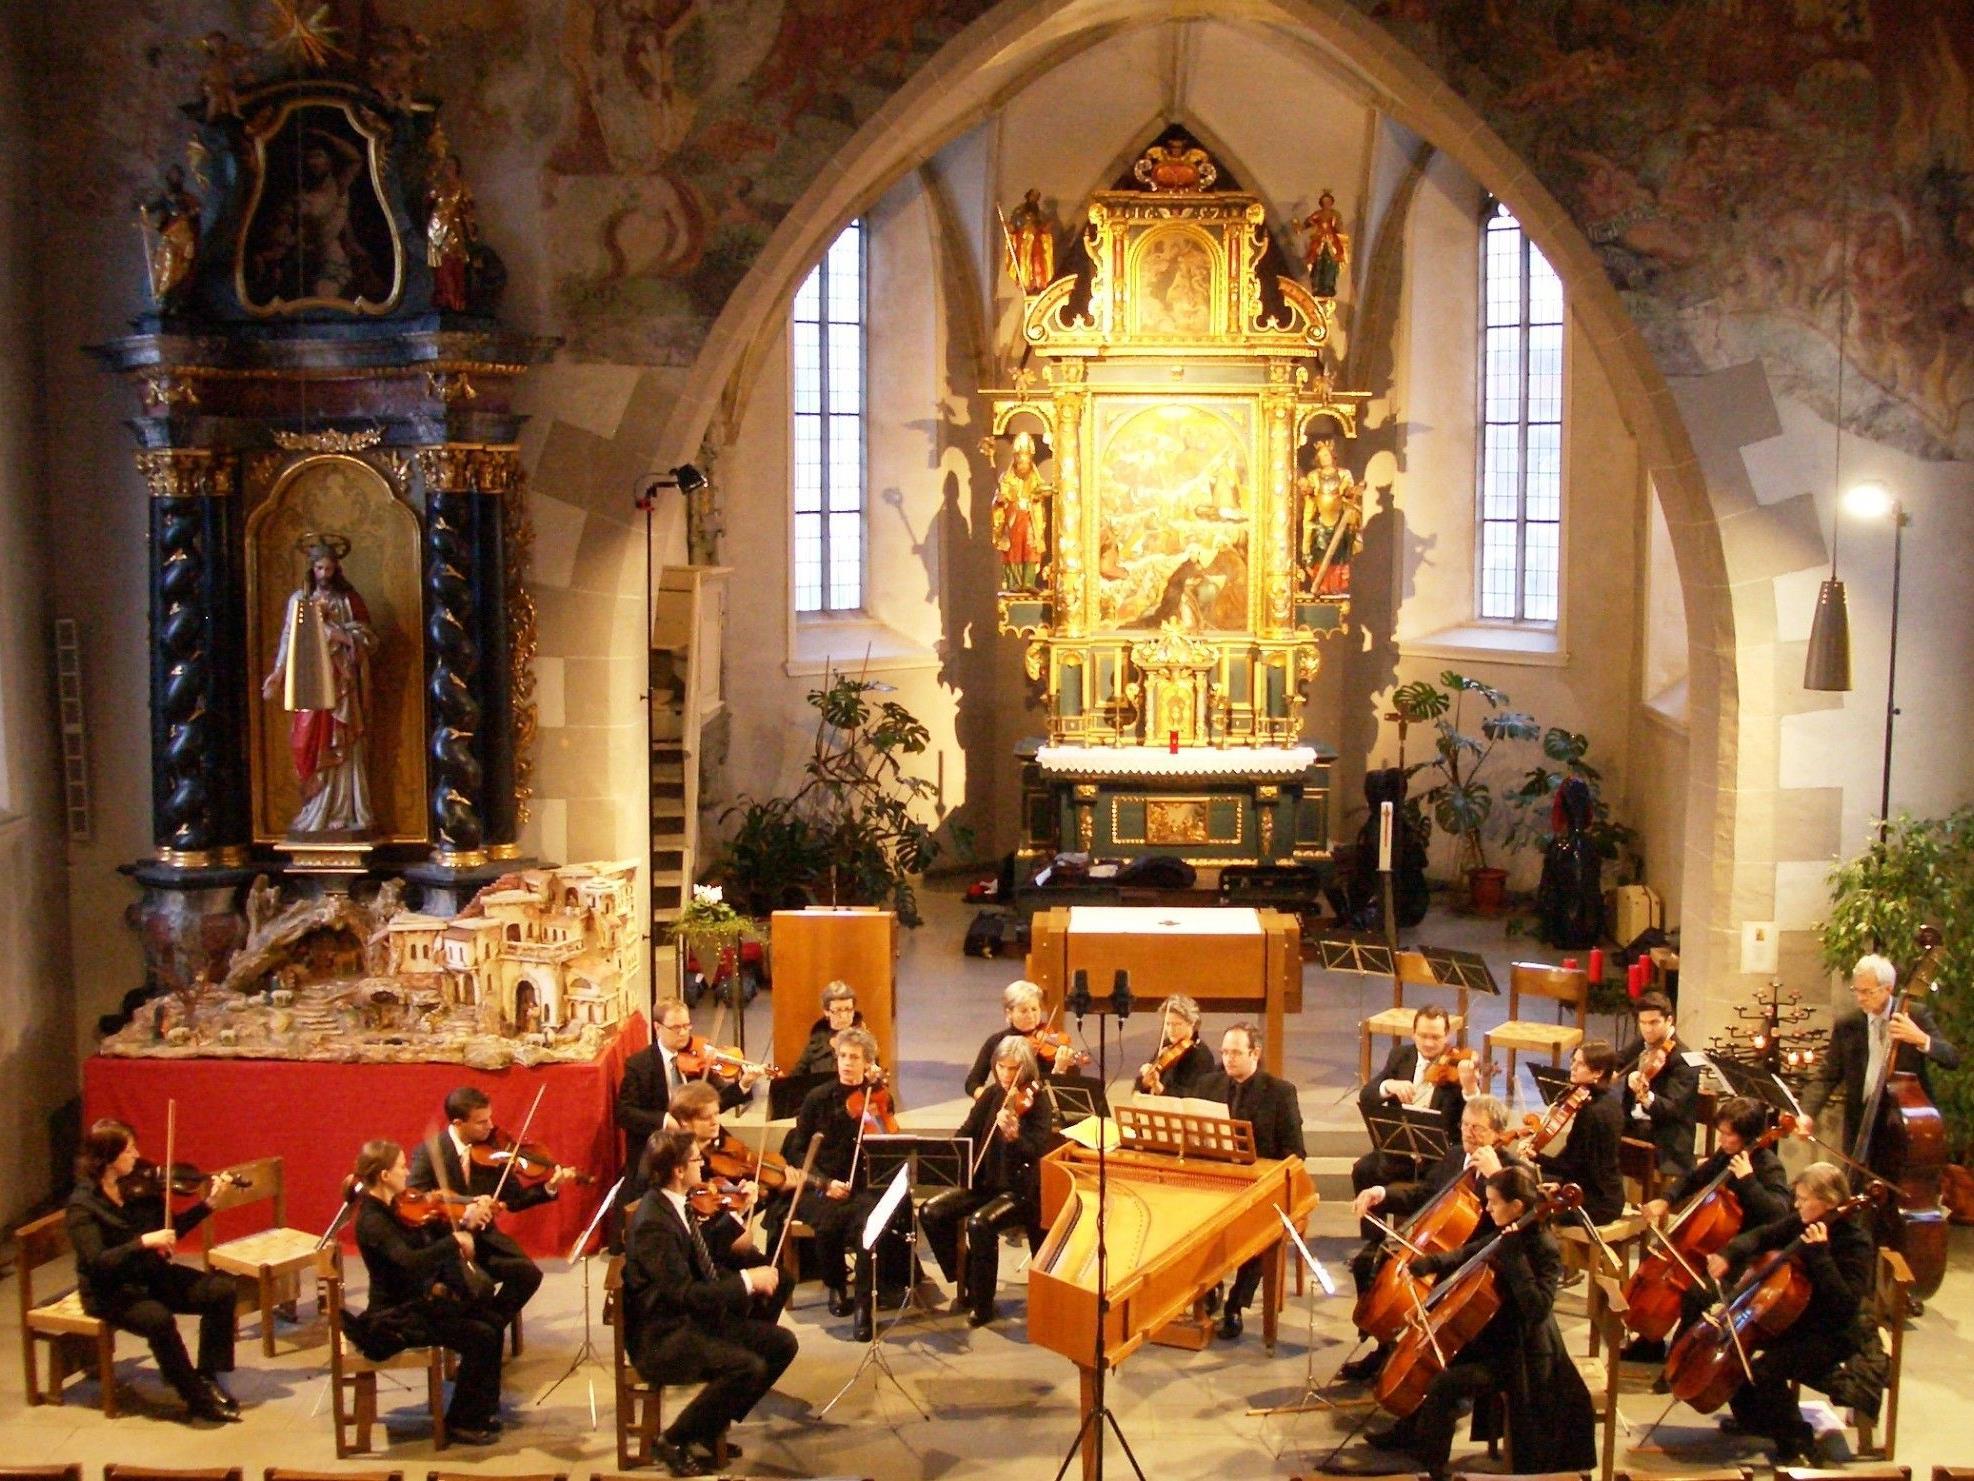 Orchesterverein Götzis